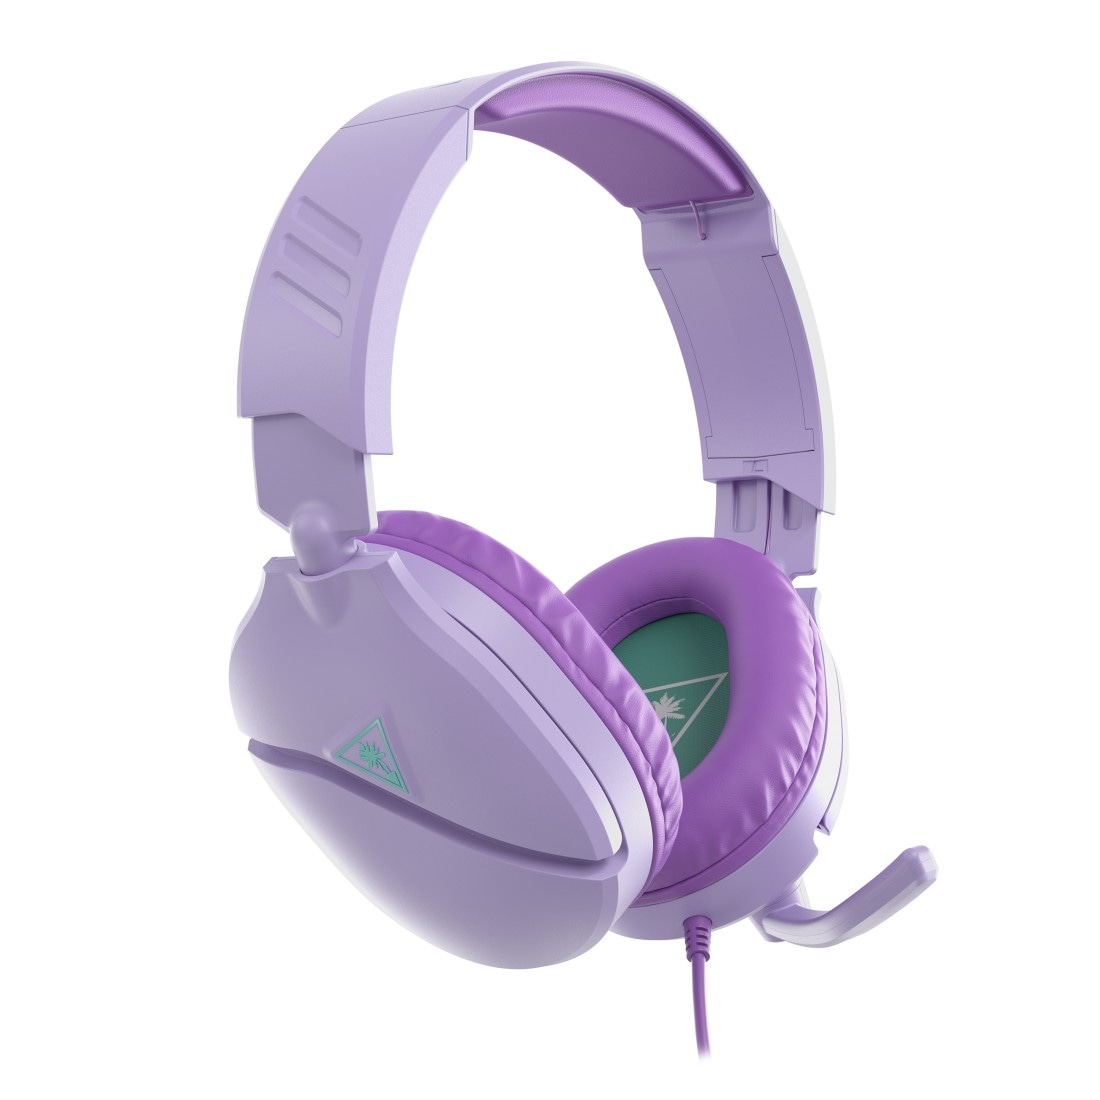 Gaming-Headset »Recon 70, Lavendel«